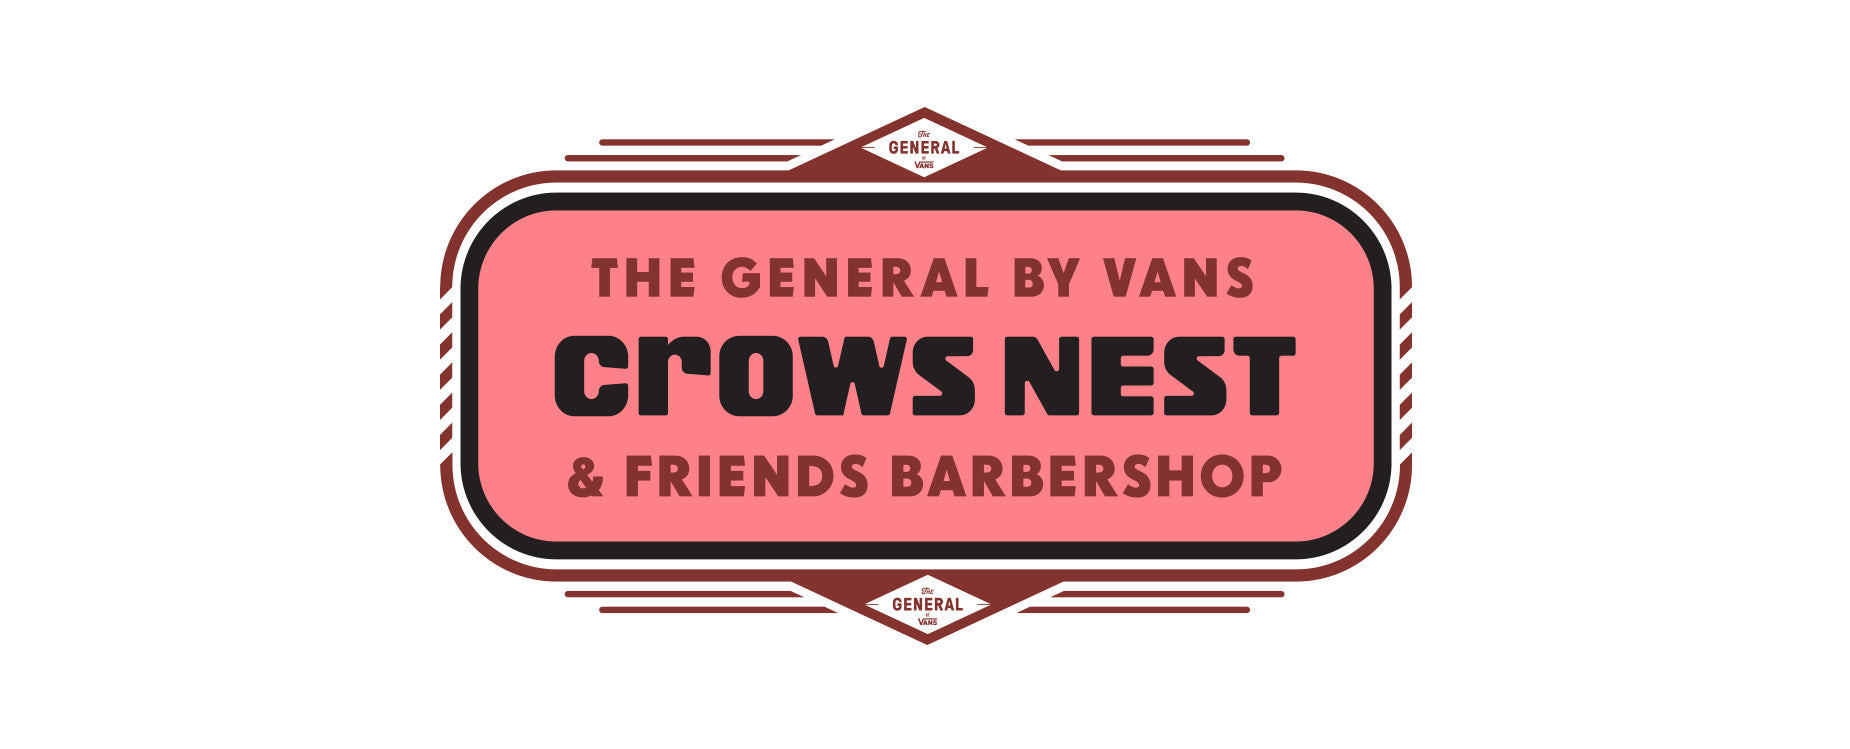 Crowsnest x Vans Barbershop -1 